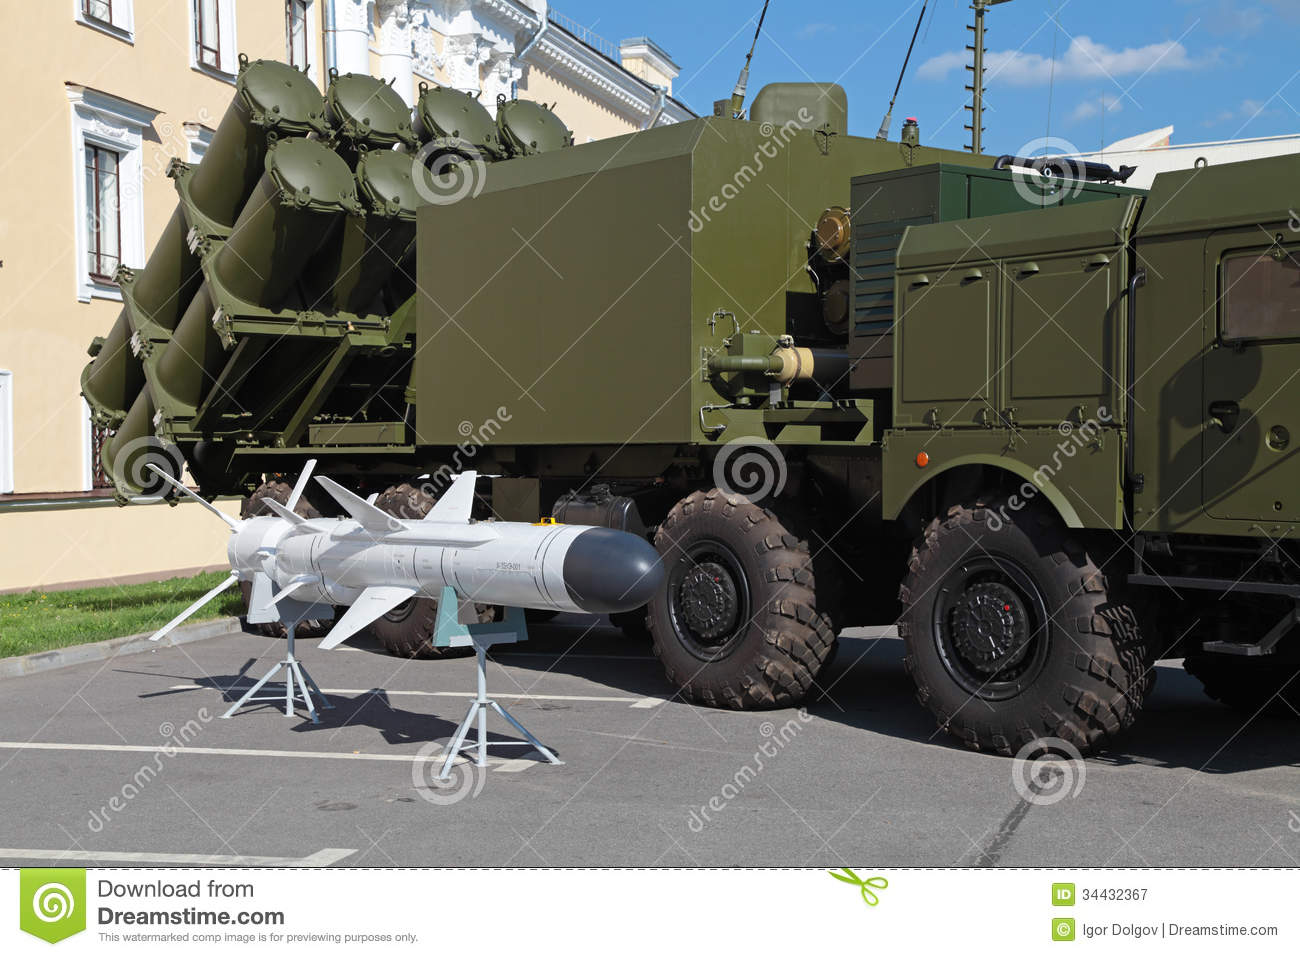 coastal-missile-complex-st-petersburg-jul-bal-e-ssc-sennight-international-maritime-defence-show-imds-jul-lenexpo-34432367.jpg